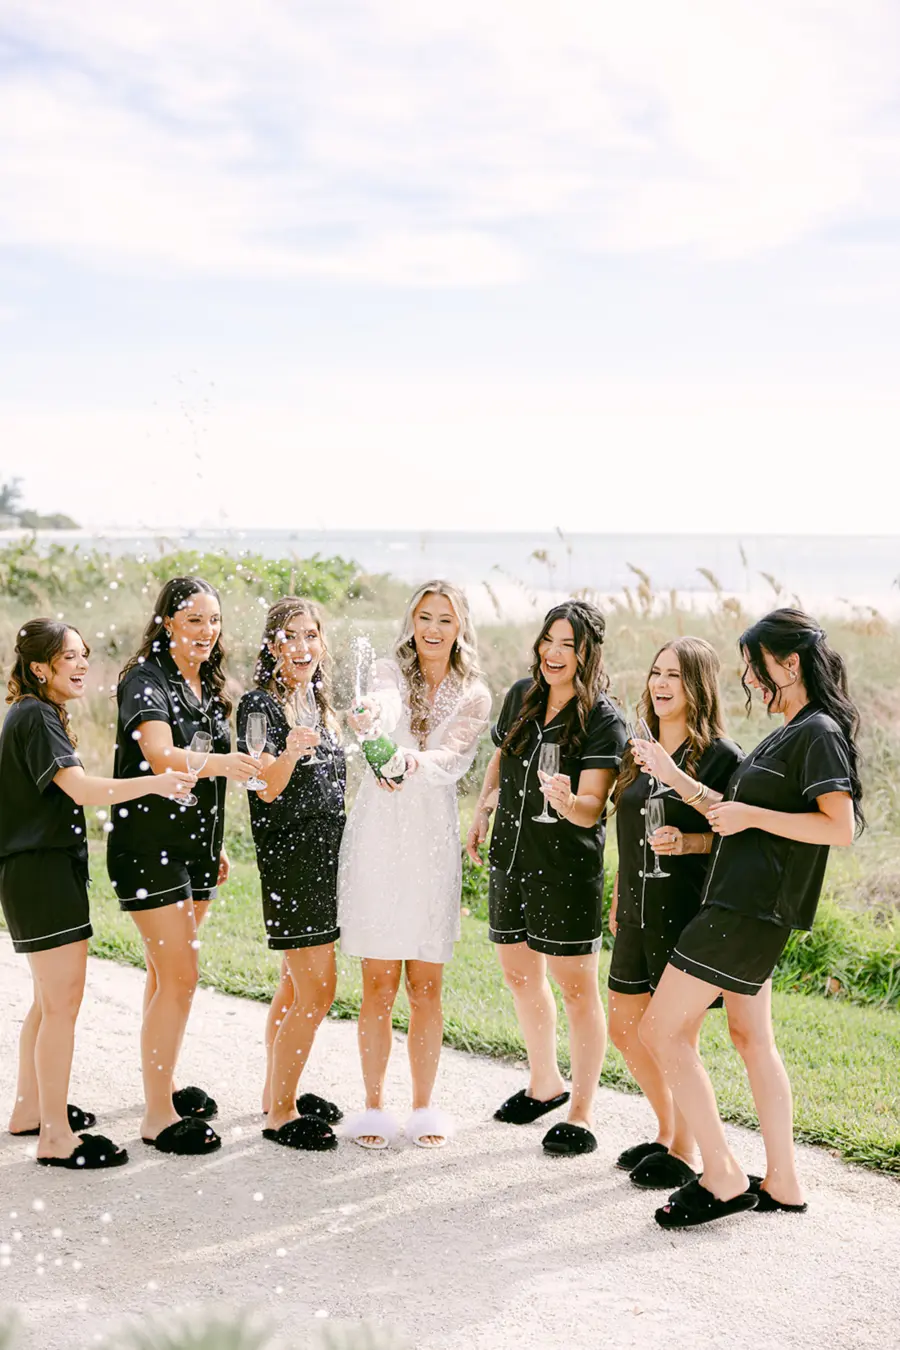 Bride and Bridesmaids Wedding Day Champagne Celebration | Matching Black Getting Ready Pajamas Ideas